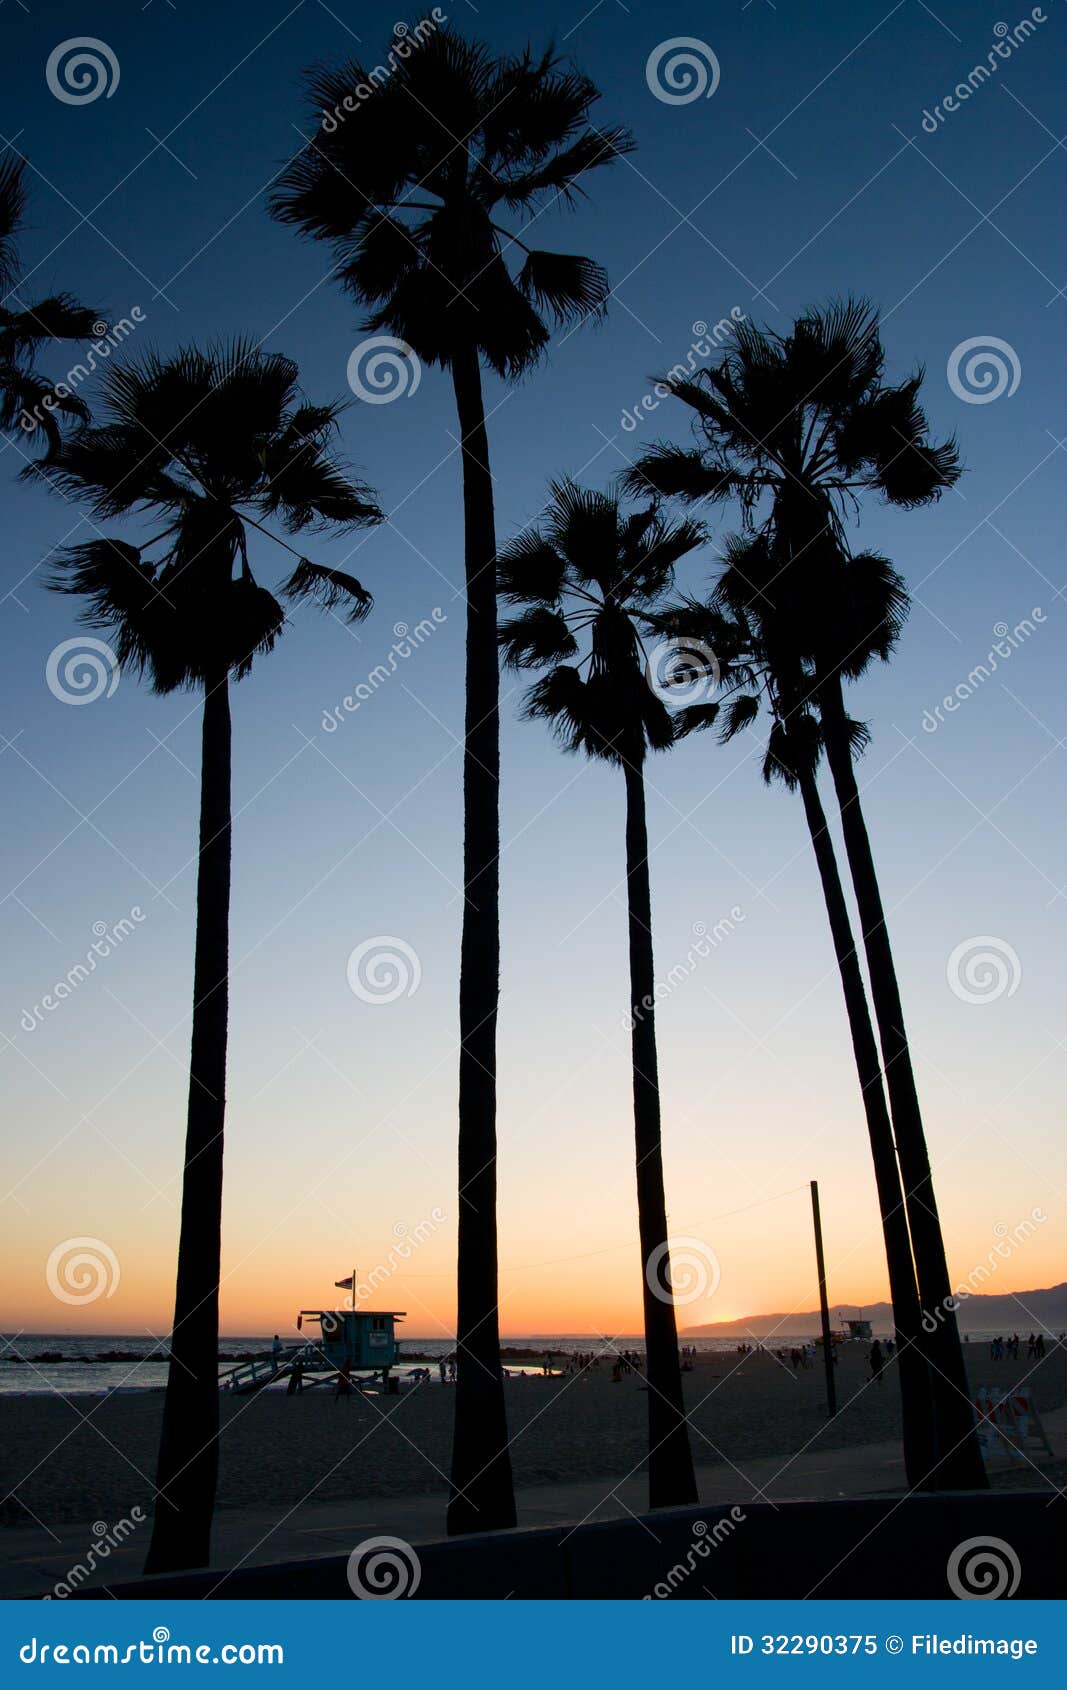 Venice Beach Sunset stock image. Image of silhouette - 32290375